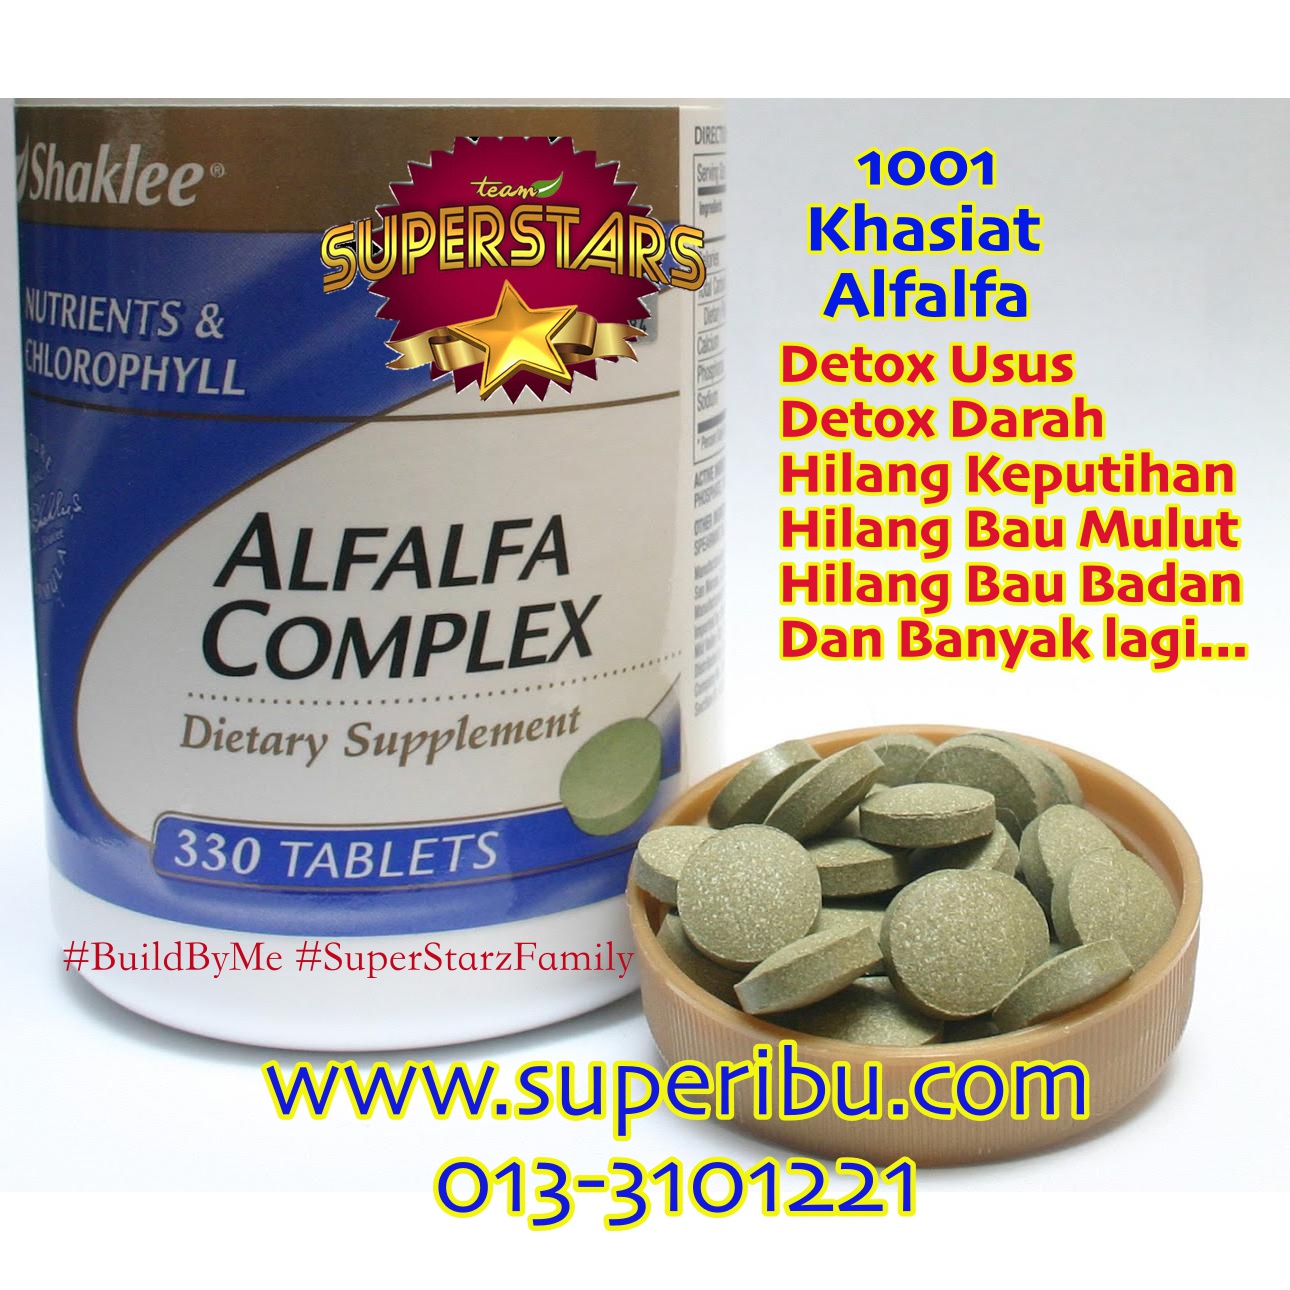 Alfalfa Complex Shaklee Herba 1001 Khasiat Kaya Klorofil